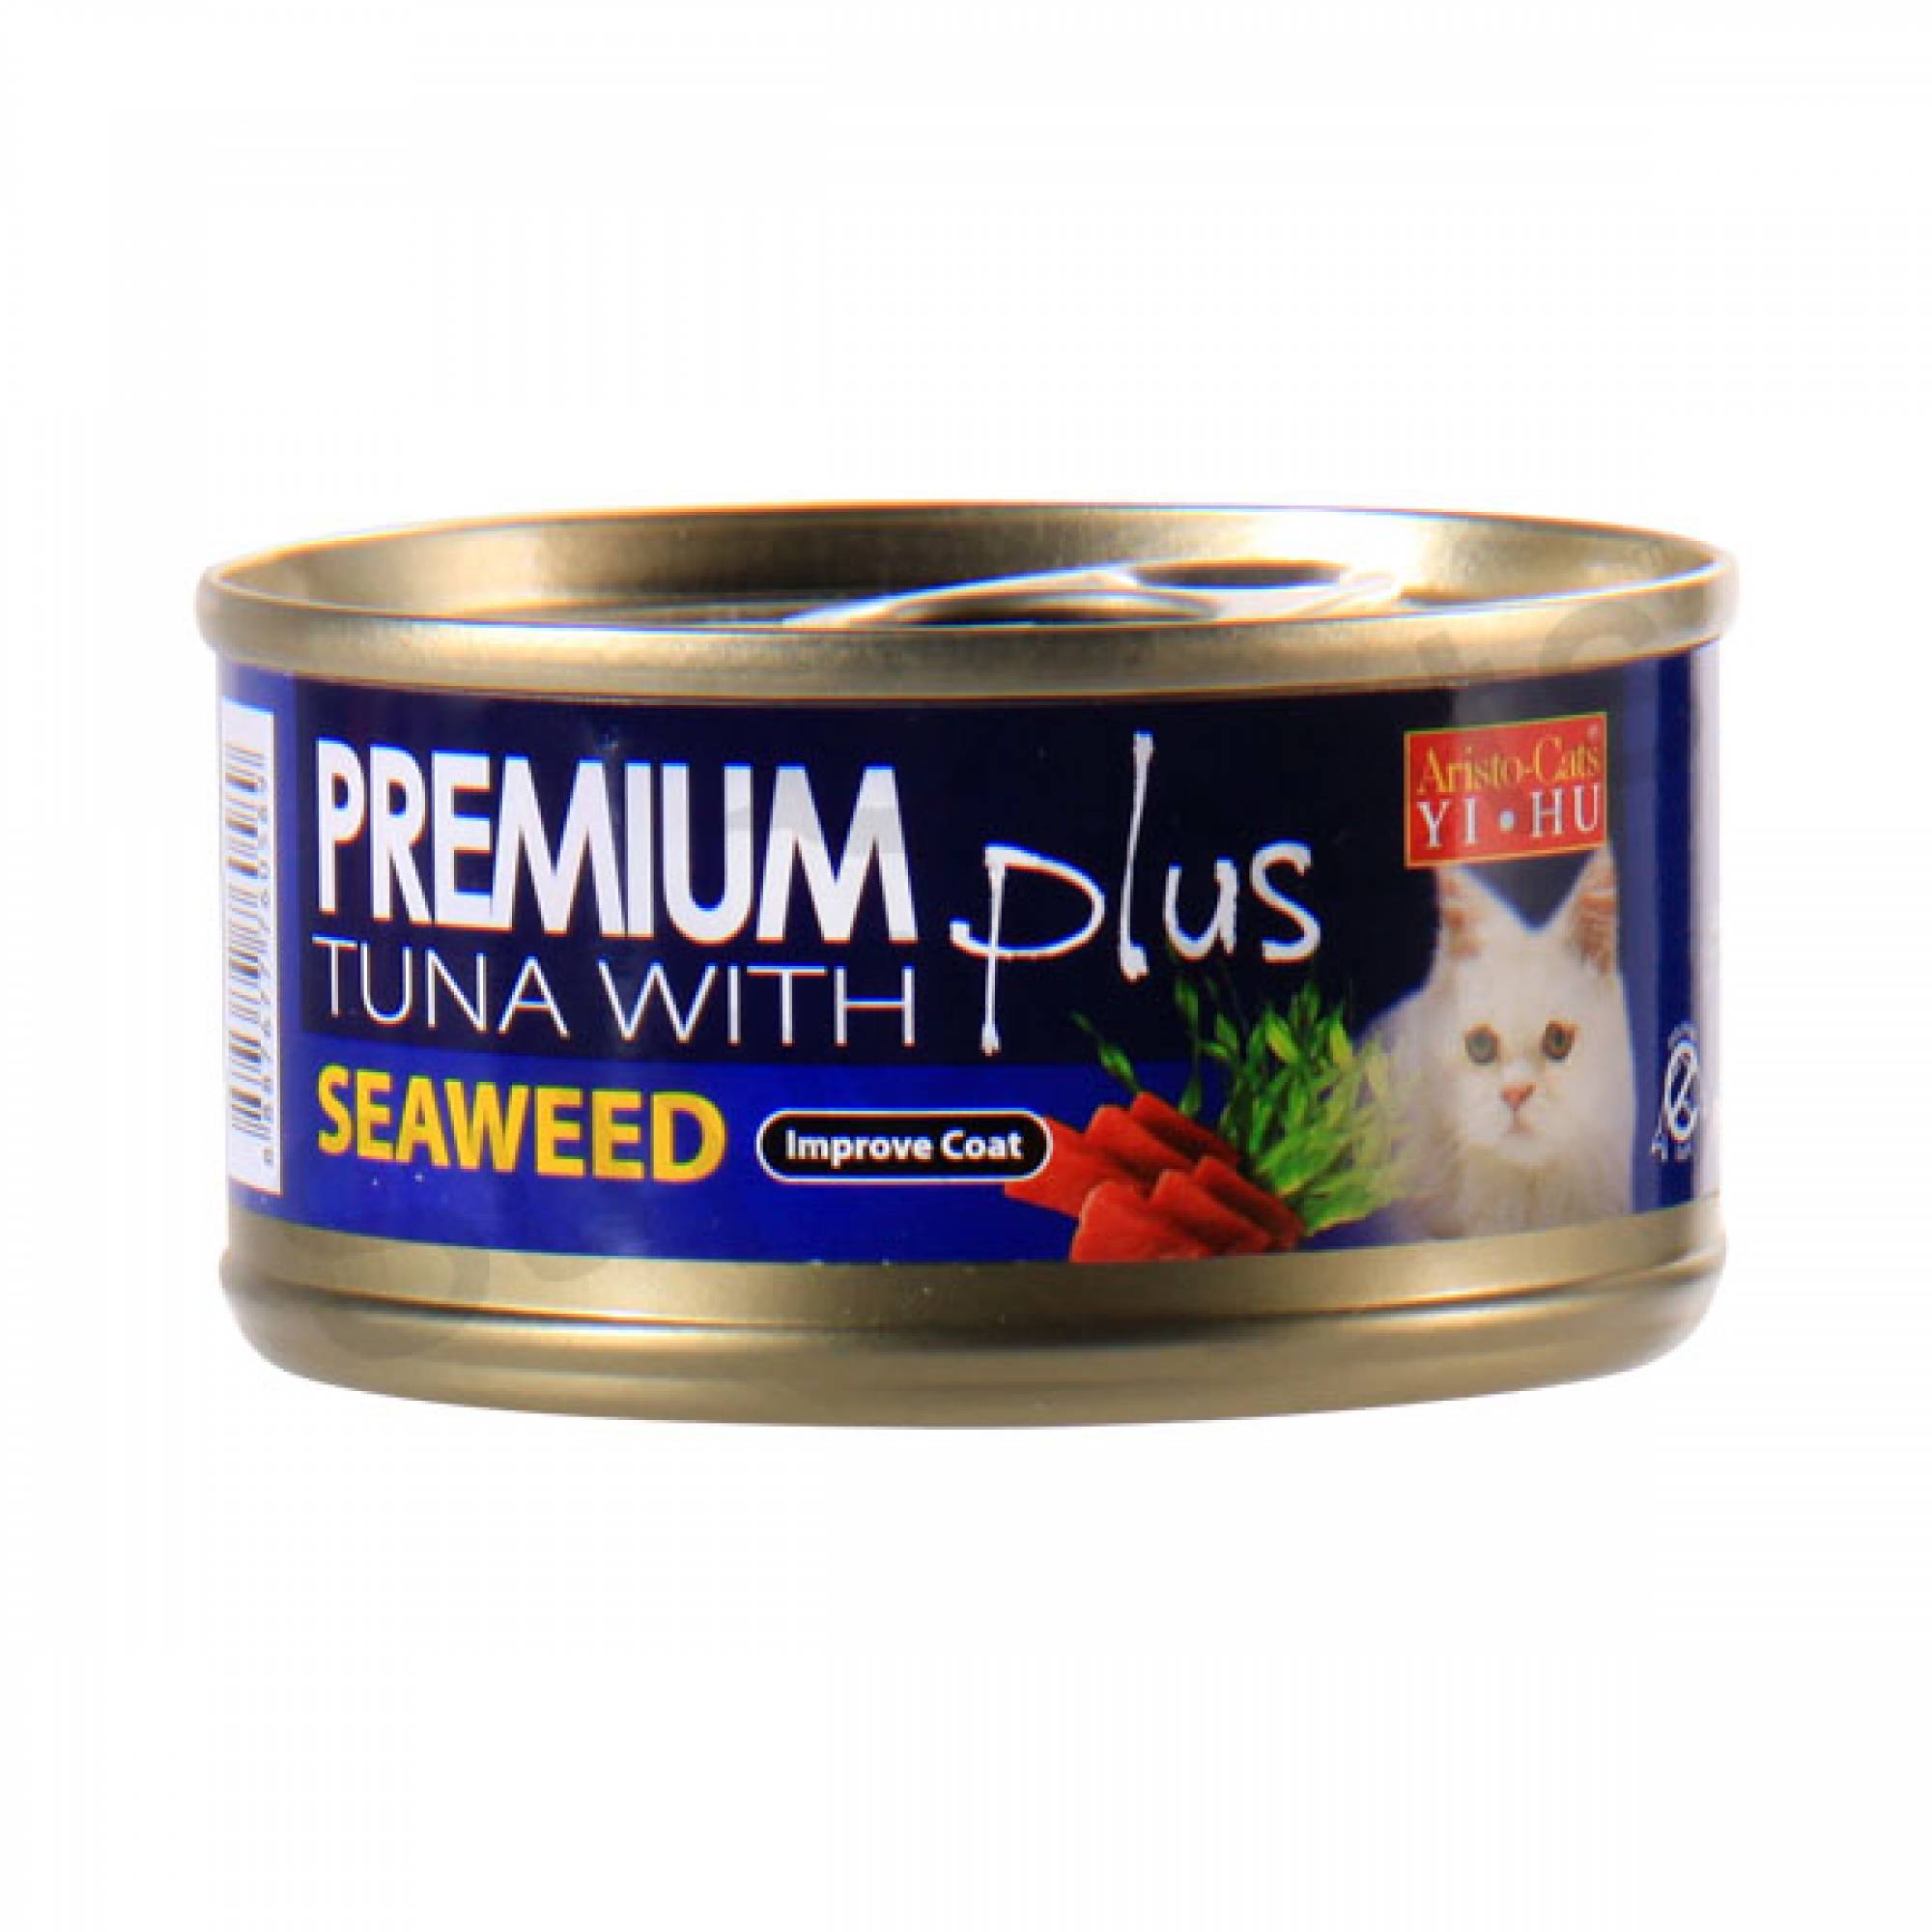 Aristo-Cats - Premium Plus - Tuna with Seaweed 80g